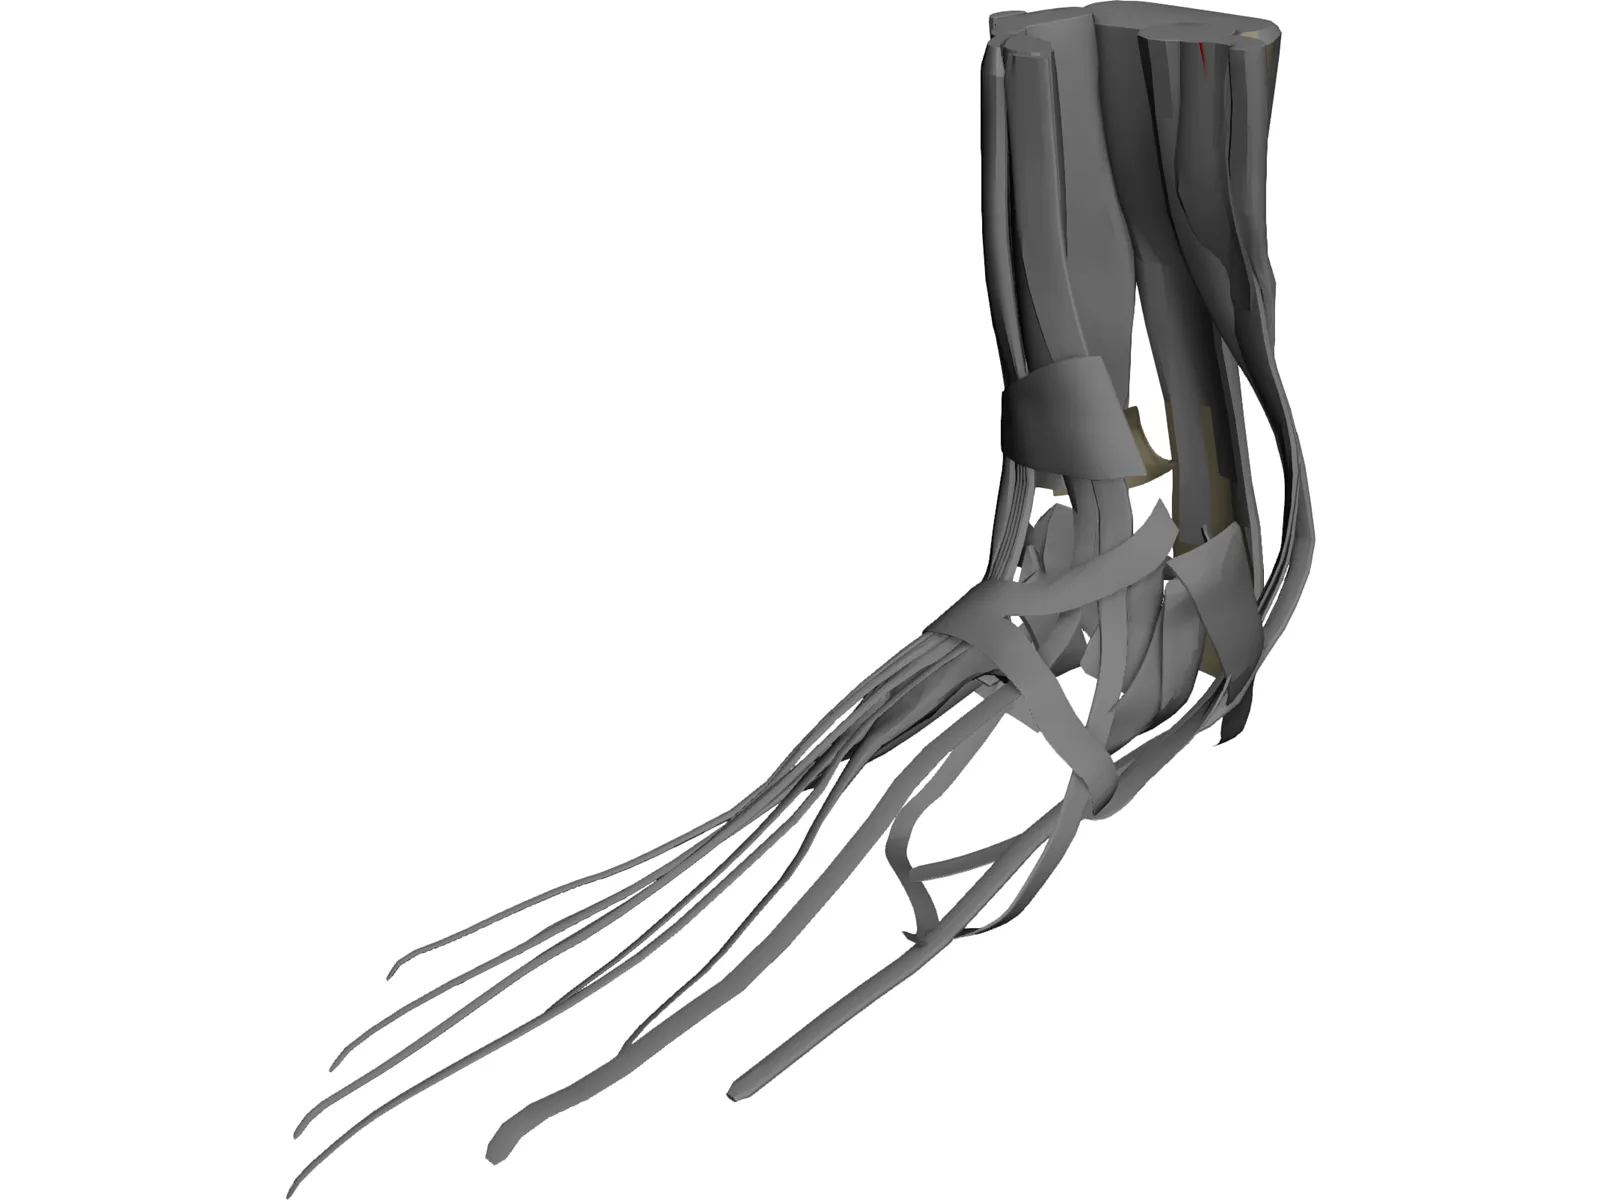 Foot Muscles 3D Model